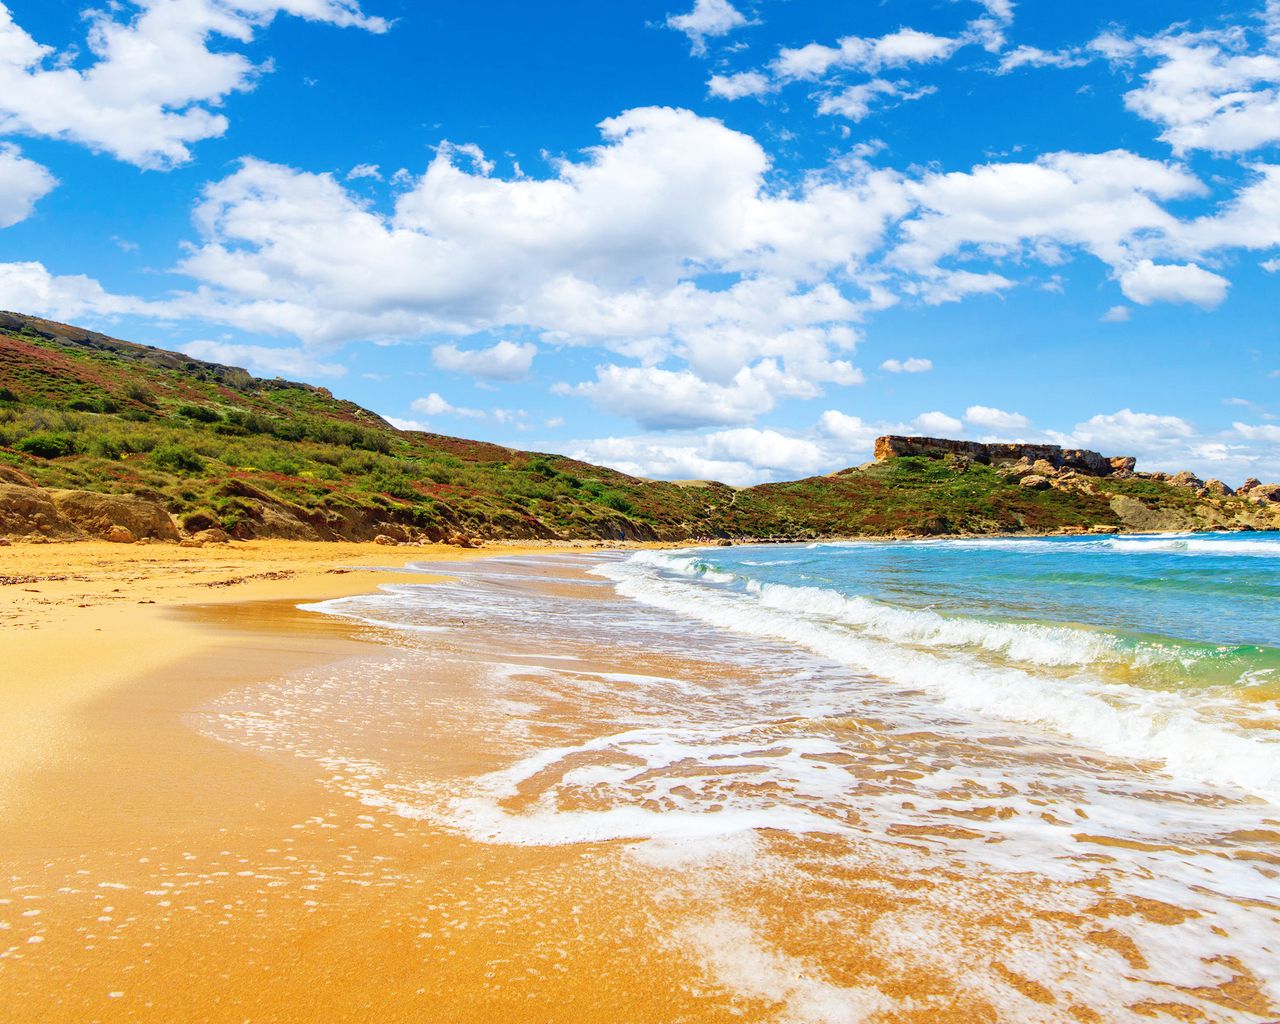 Malta Beaches: 15 Best Beaches In Malta, Gozo & Comino - Azure